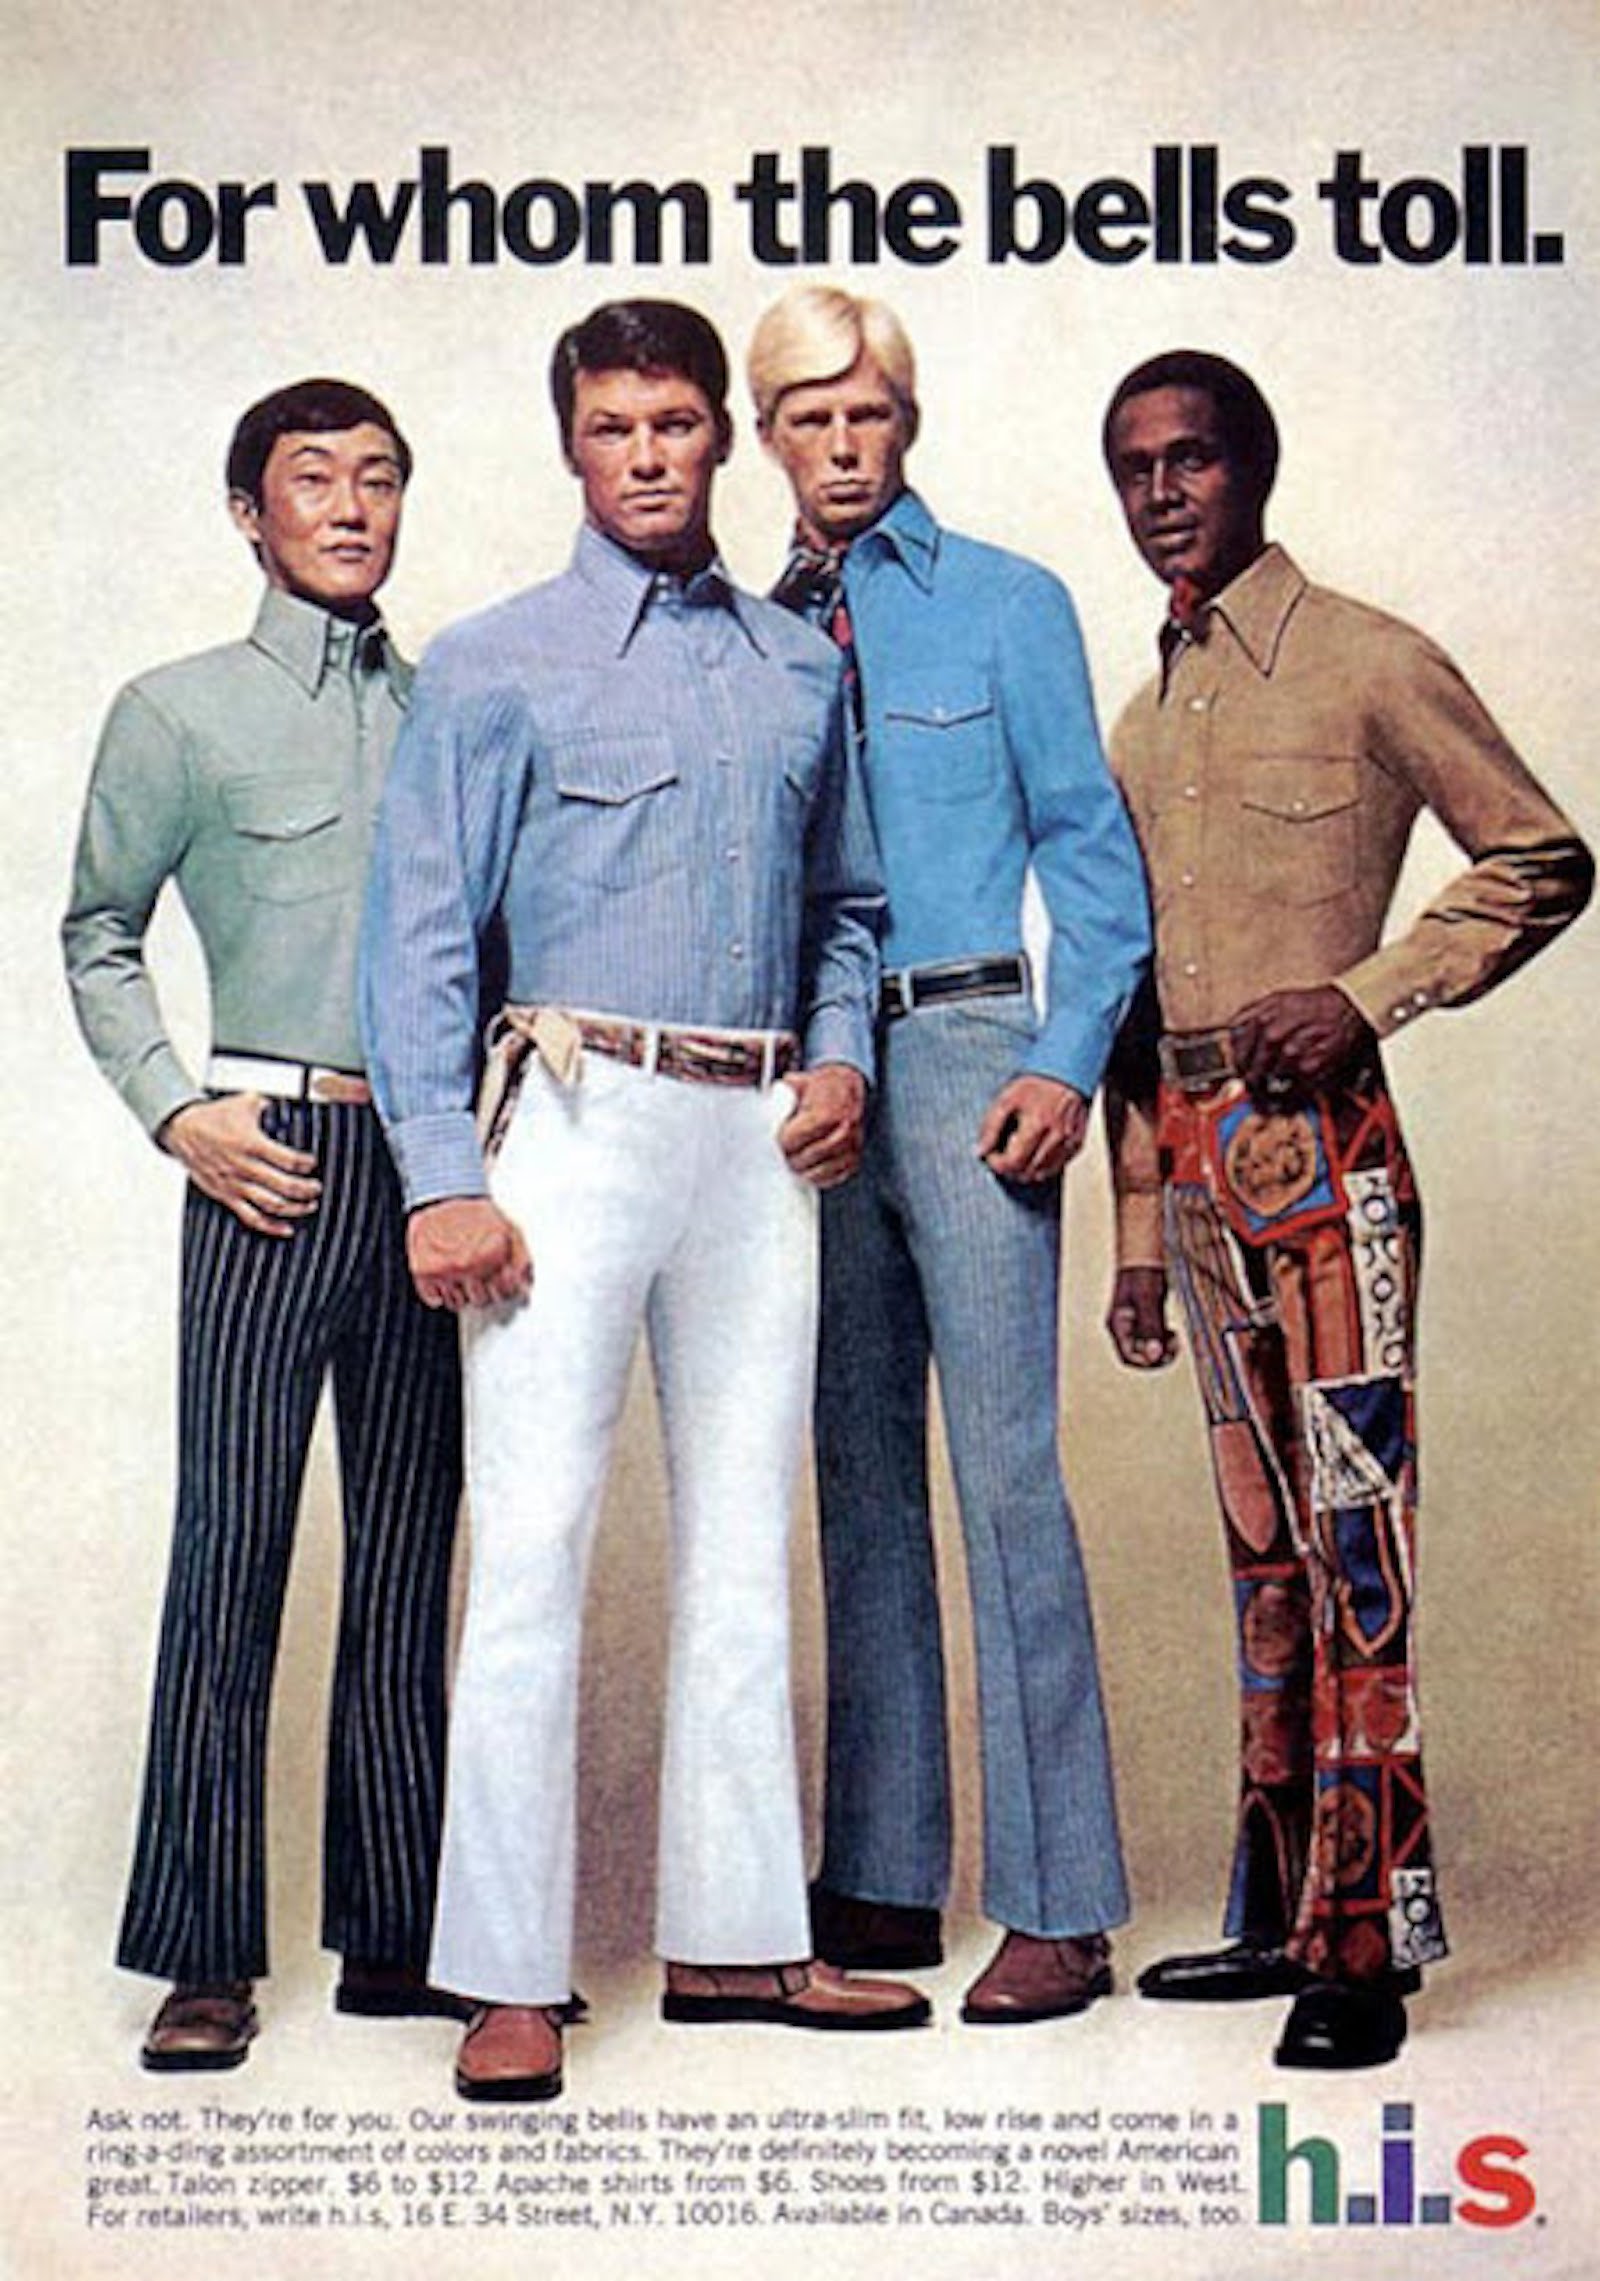 Мужчины 70 х годов. Одежда 70-х годов мужская Америка. Мужская мода 70-х годов в Америке. 70е годы мода мужская Англия. Мужская мода 70-х клеш.